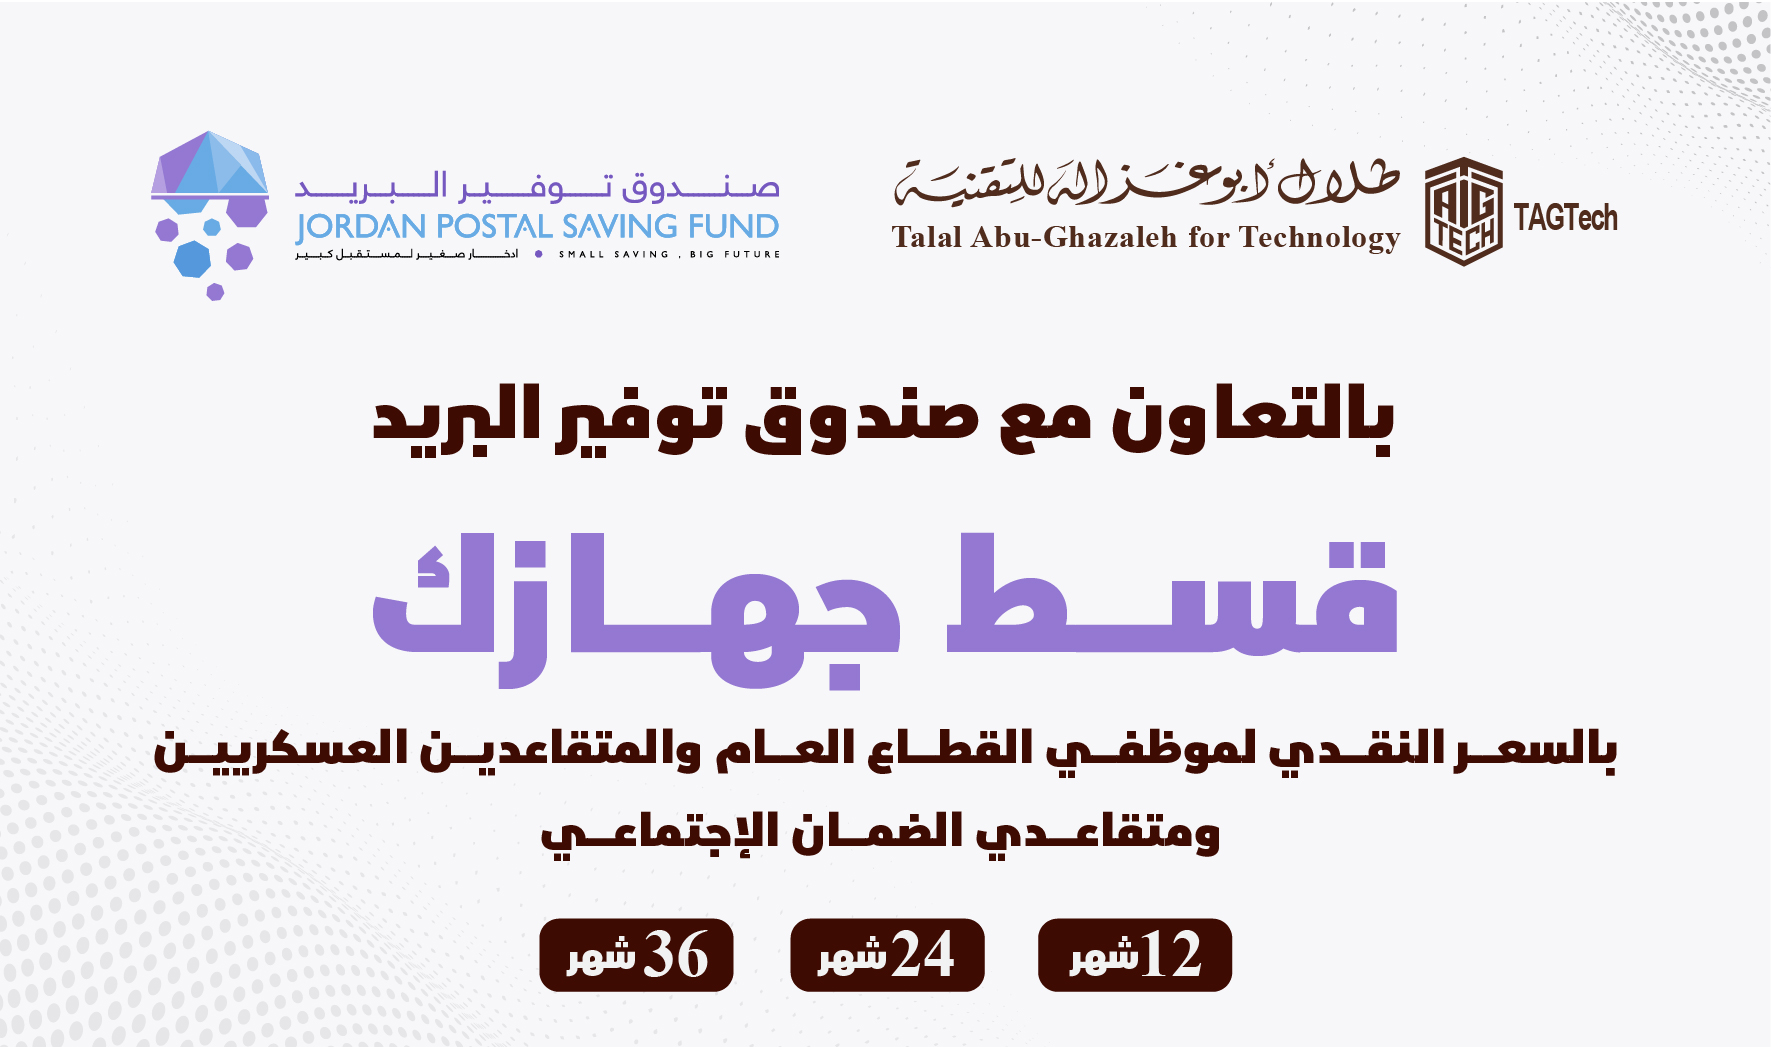 ‘Abu-Ghazaleh for Technology’ Sign MoU with Jordan Postal Saving Fund